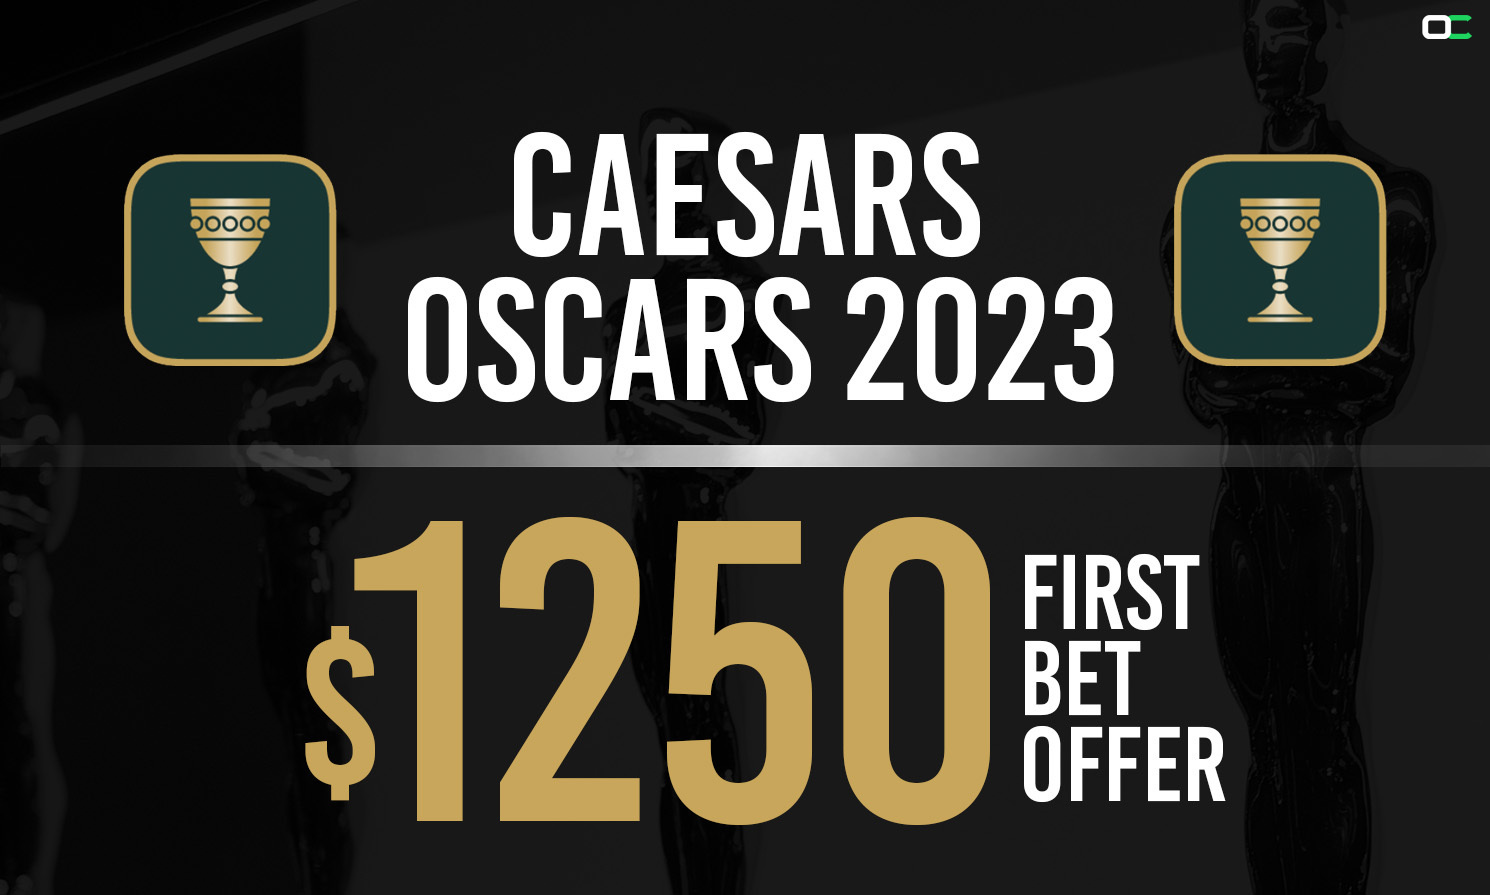 Caesars Oscars 2023